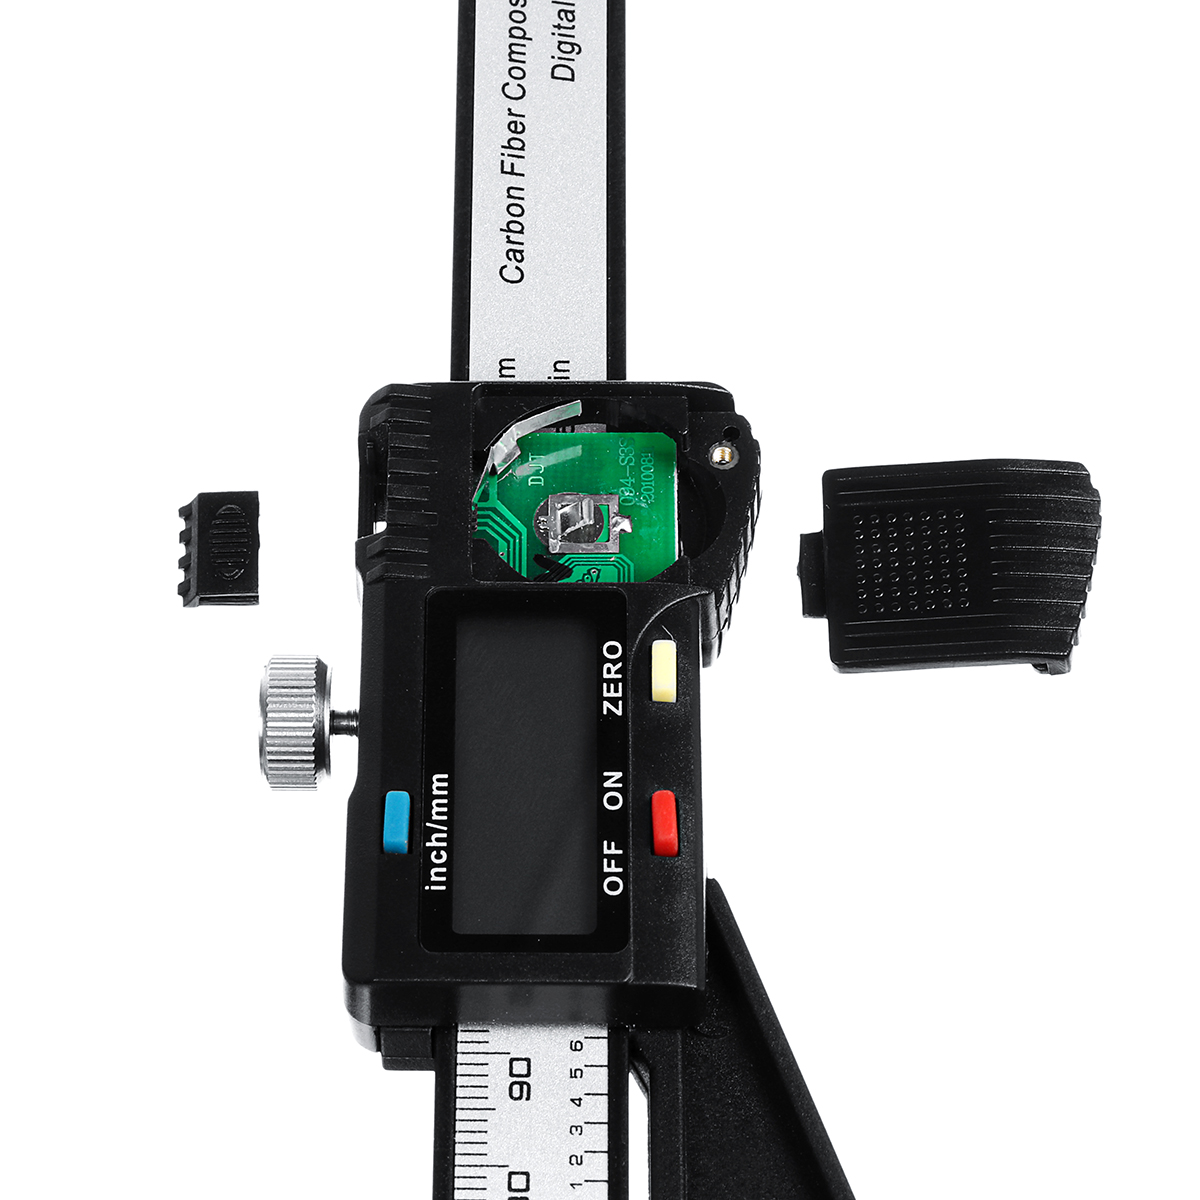 Digital-Height-Gauge-150mm-6-Vernier-Caliper-Micrometer-Electronic-Measurement-1571282-6